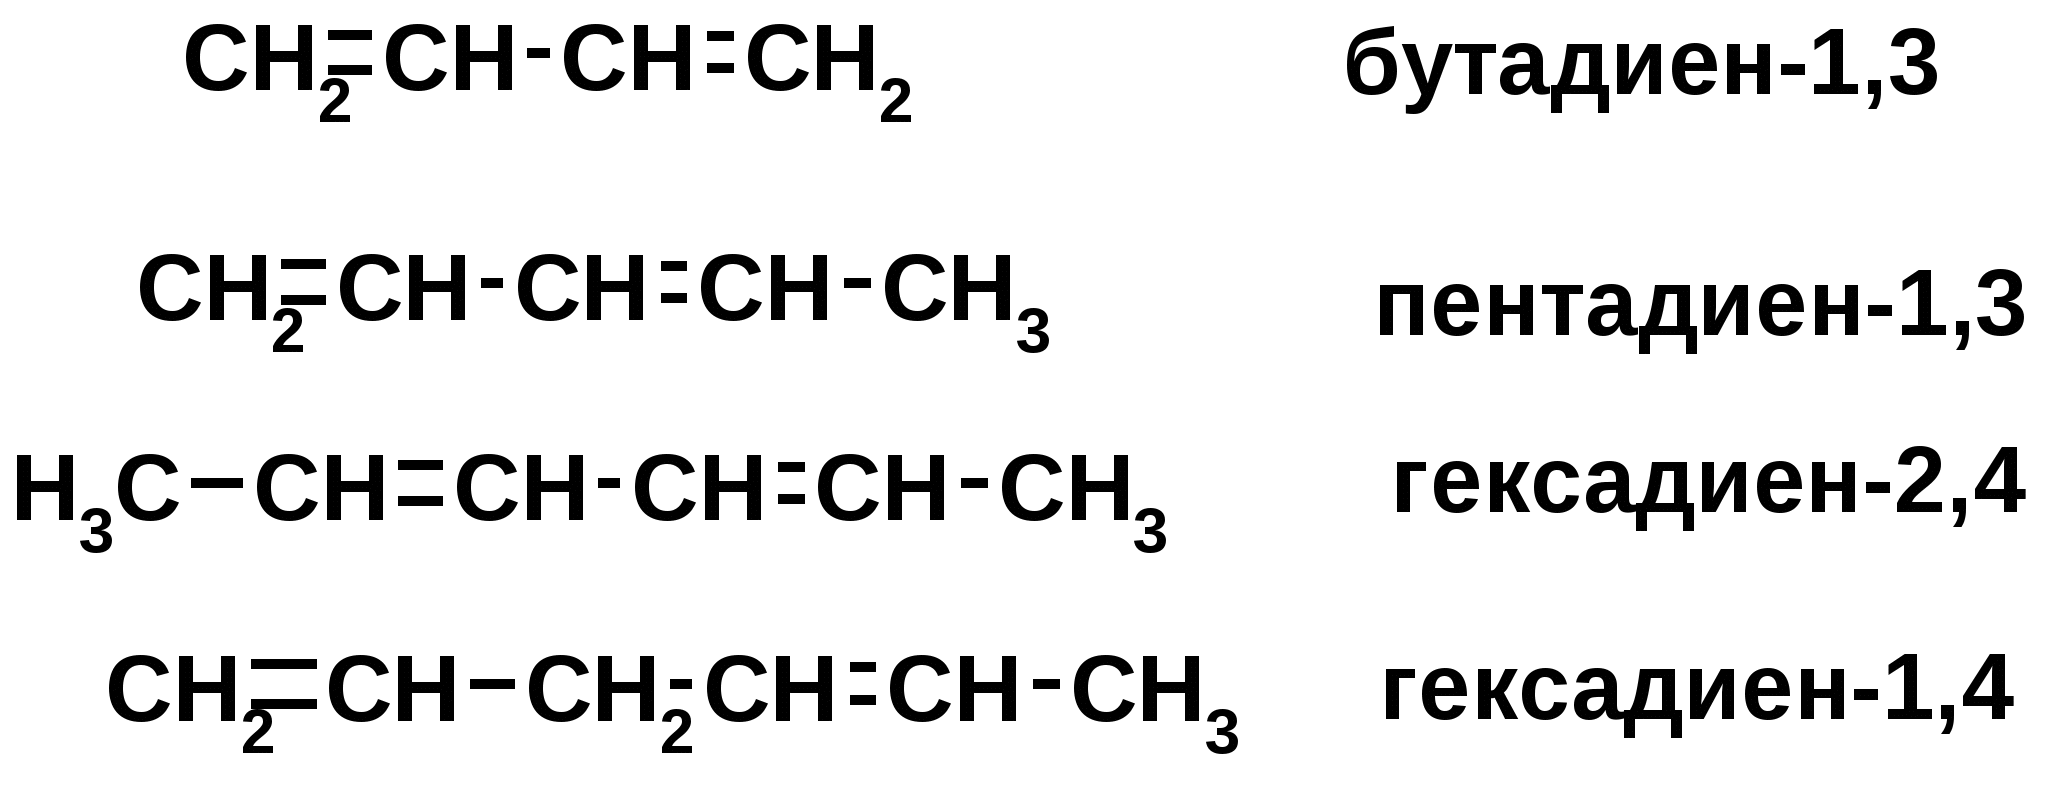 Пентадиен бром. Структурная формула гексадиена 2.3. Структурная формула гексадиена. Структурная формула гексадиена 1.3. Гексадиен структурная формула.